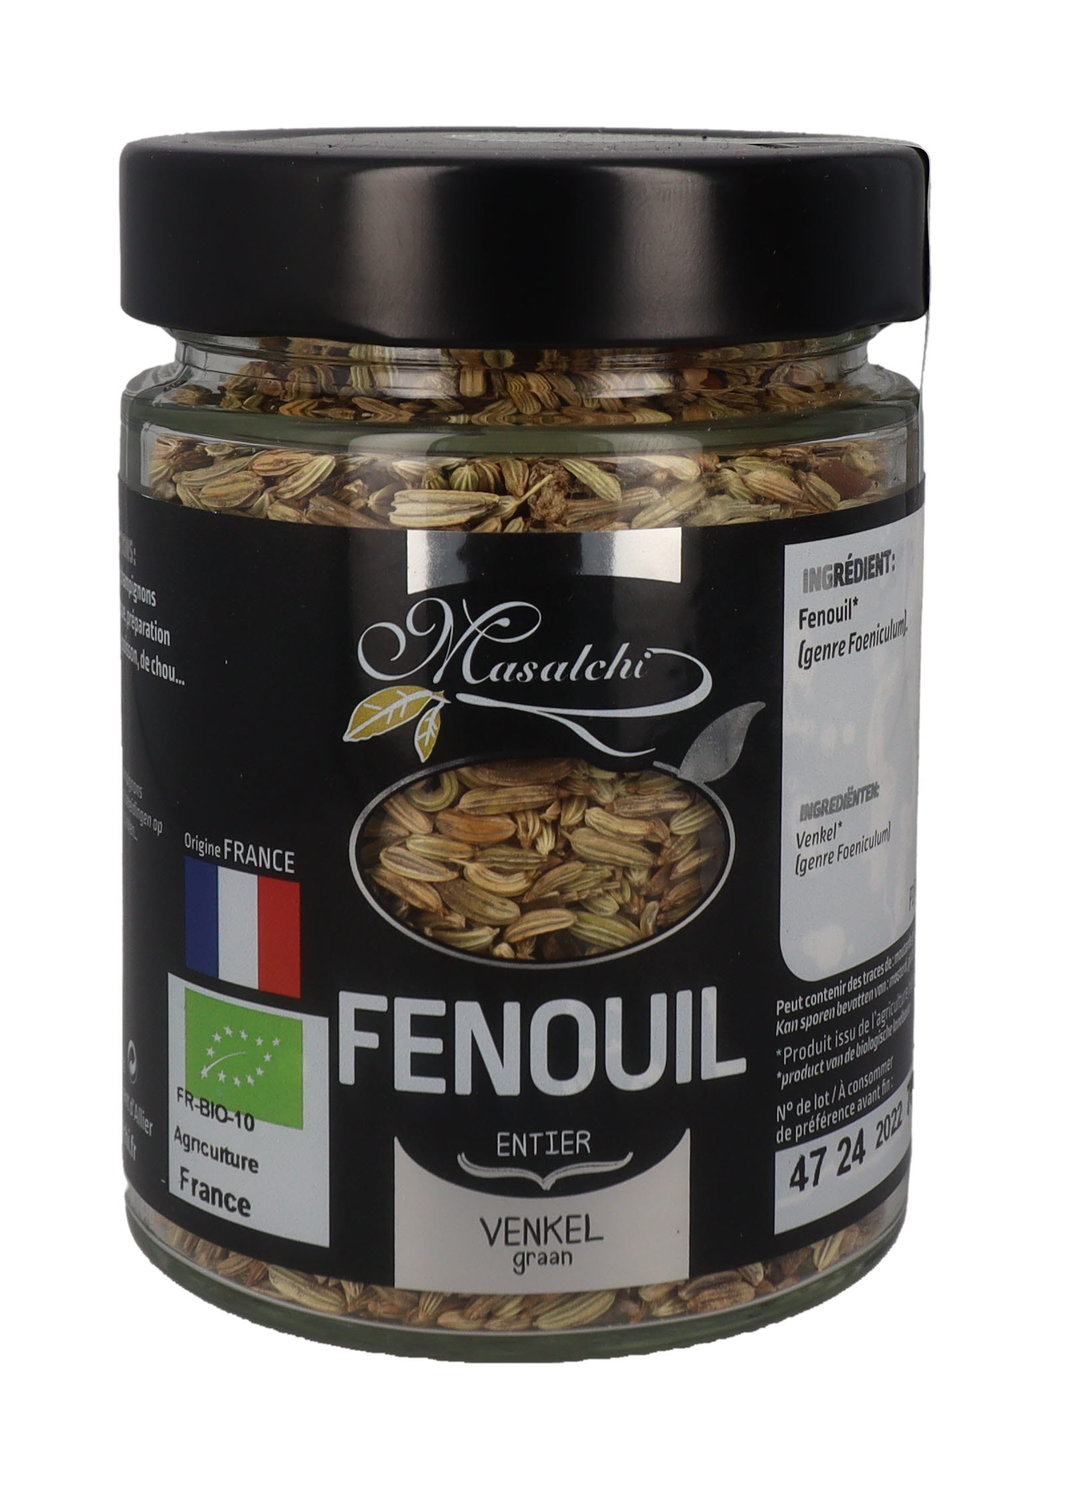 Fenouil graines bio 50 gr - L'Herbier de France